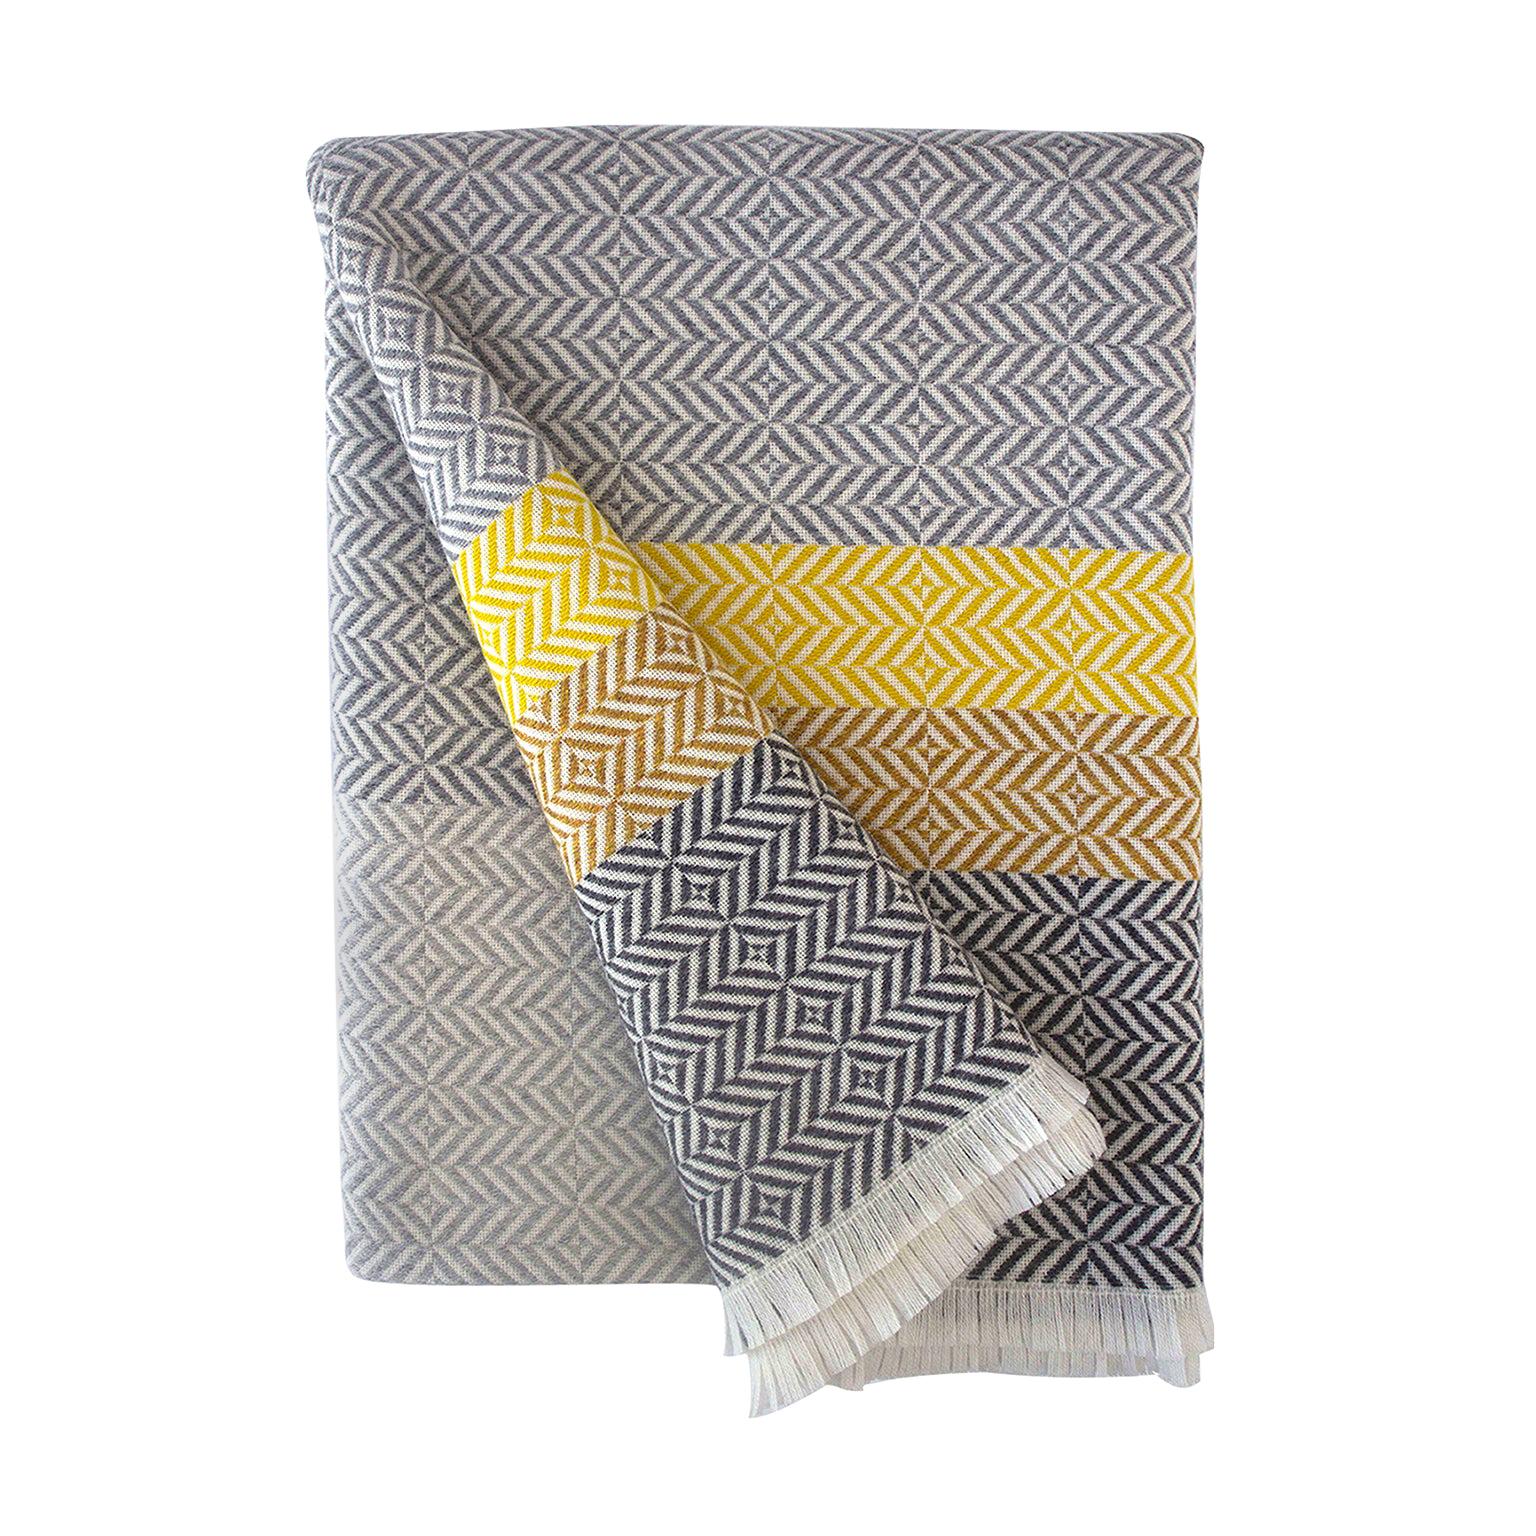 'Uccle' Block Geometric Woven Merino Wool Throw, Piccalilli Yellow/Greys For Sale